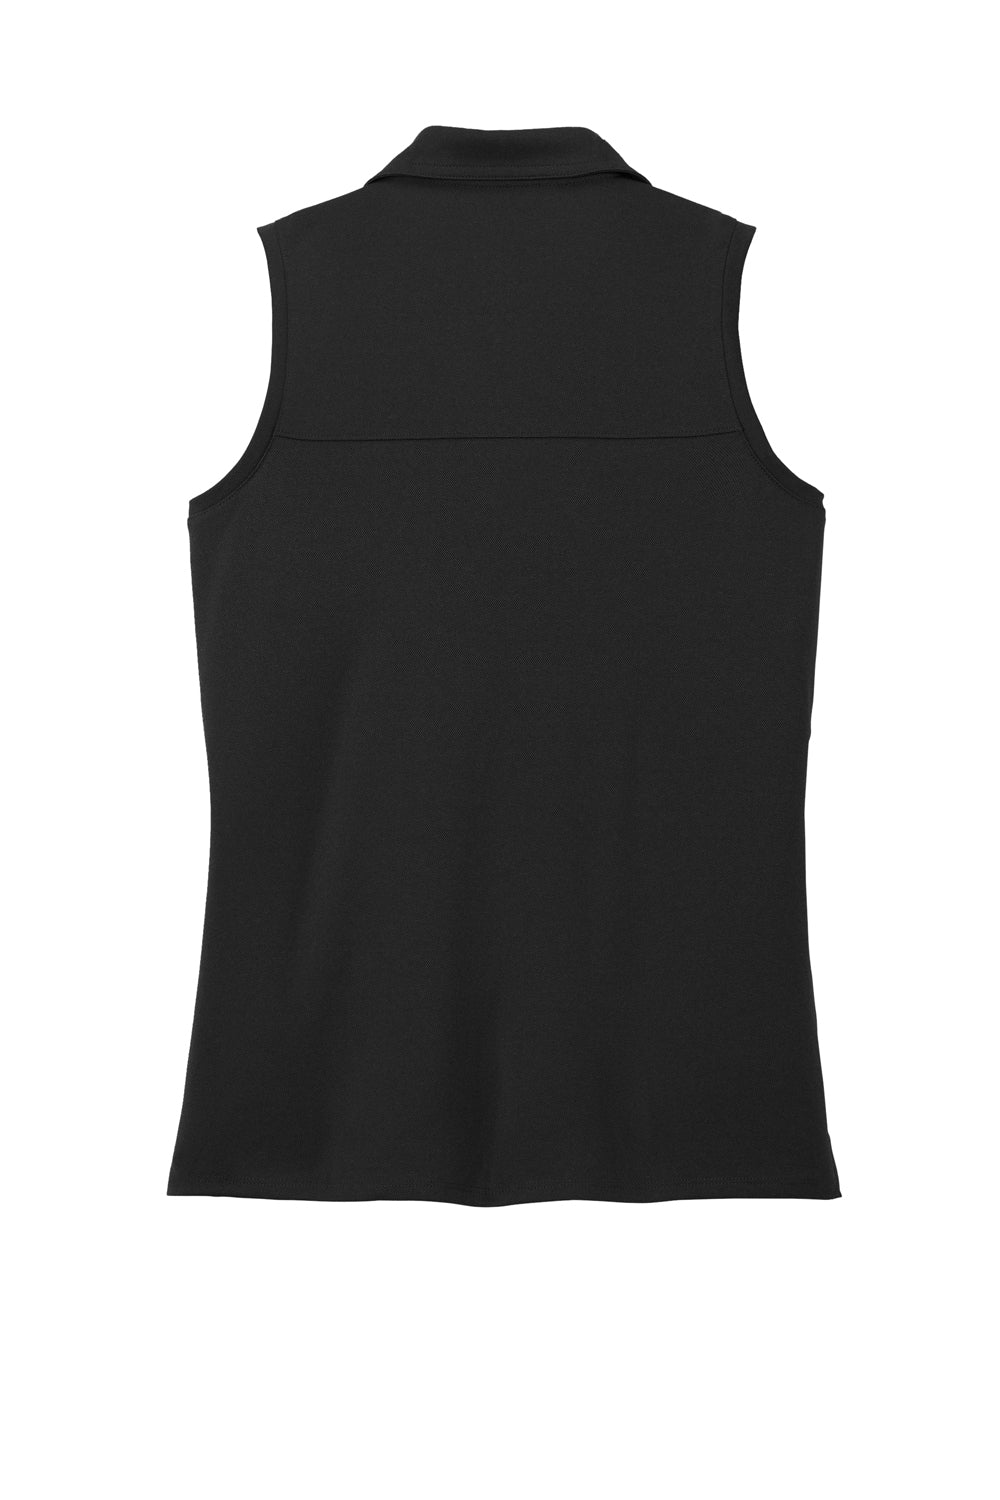 TravisMathew TM1WX001 Womens Coto Performance Wrinkle Resistant Sleeveless Polo Shirt Black Flat Back